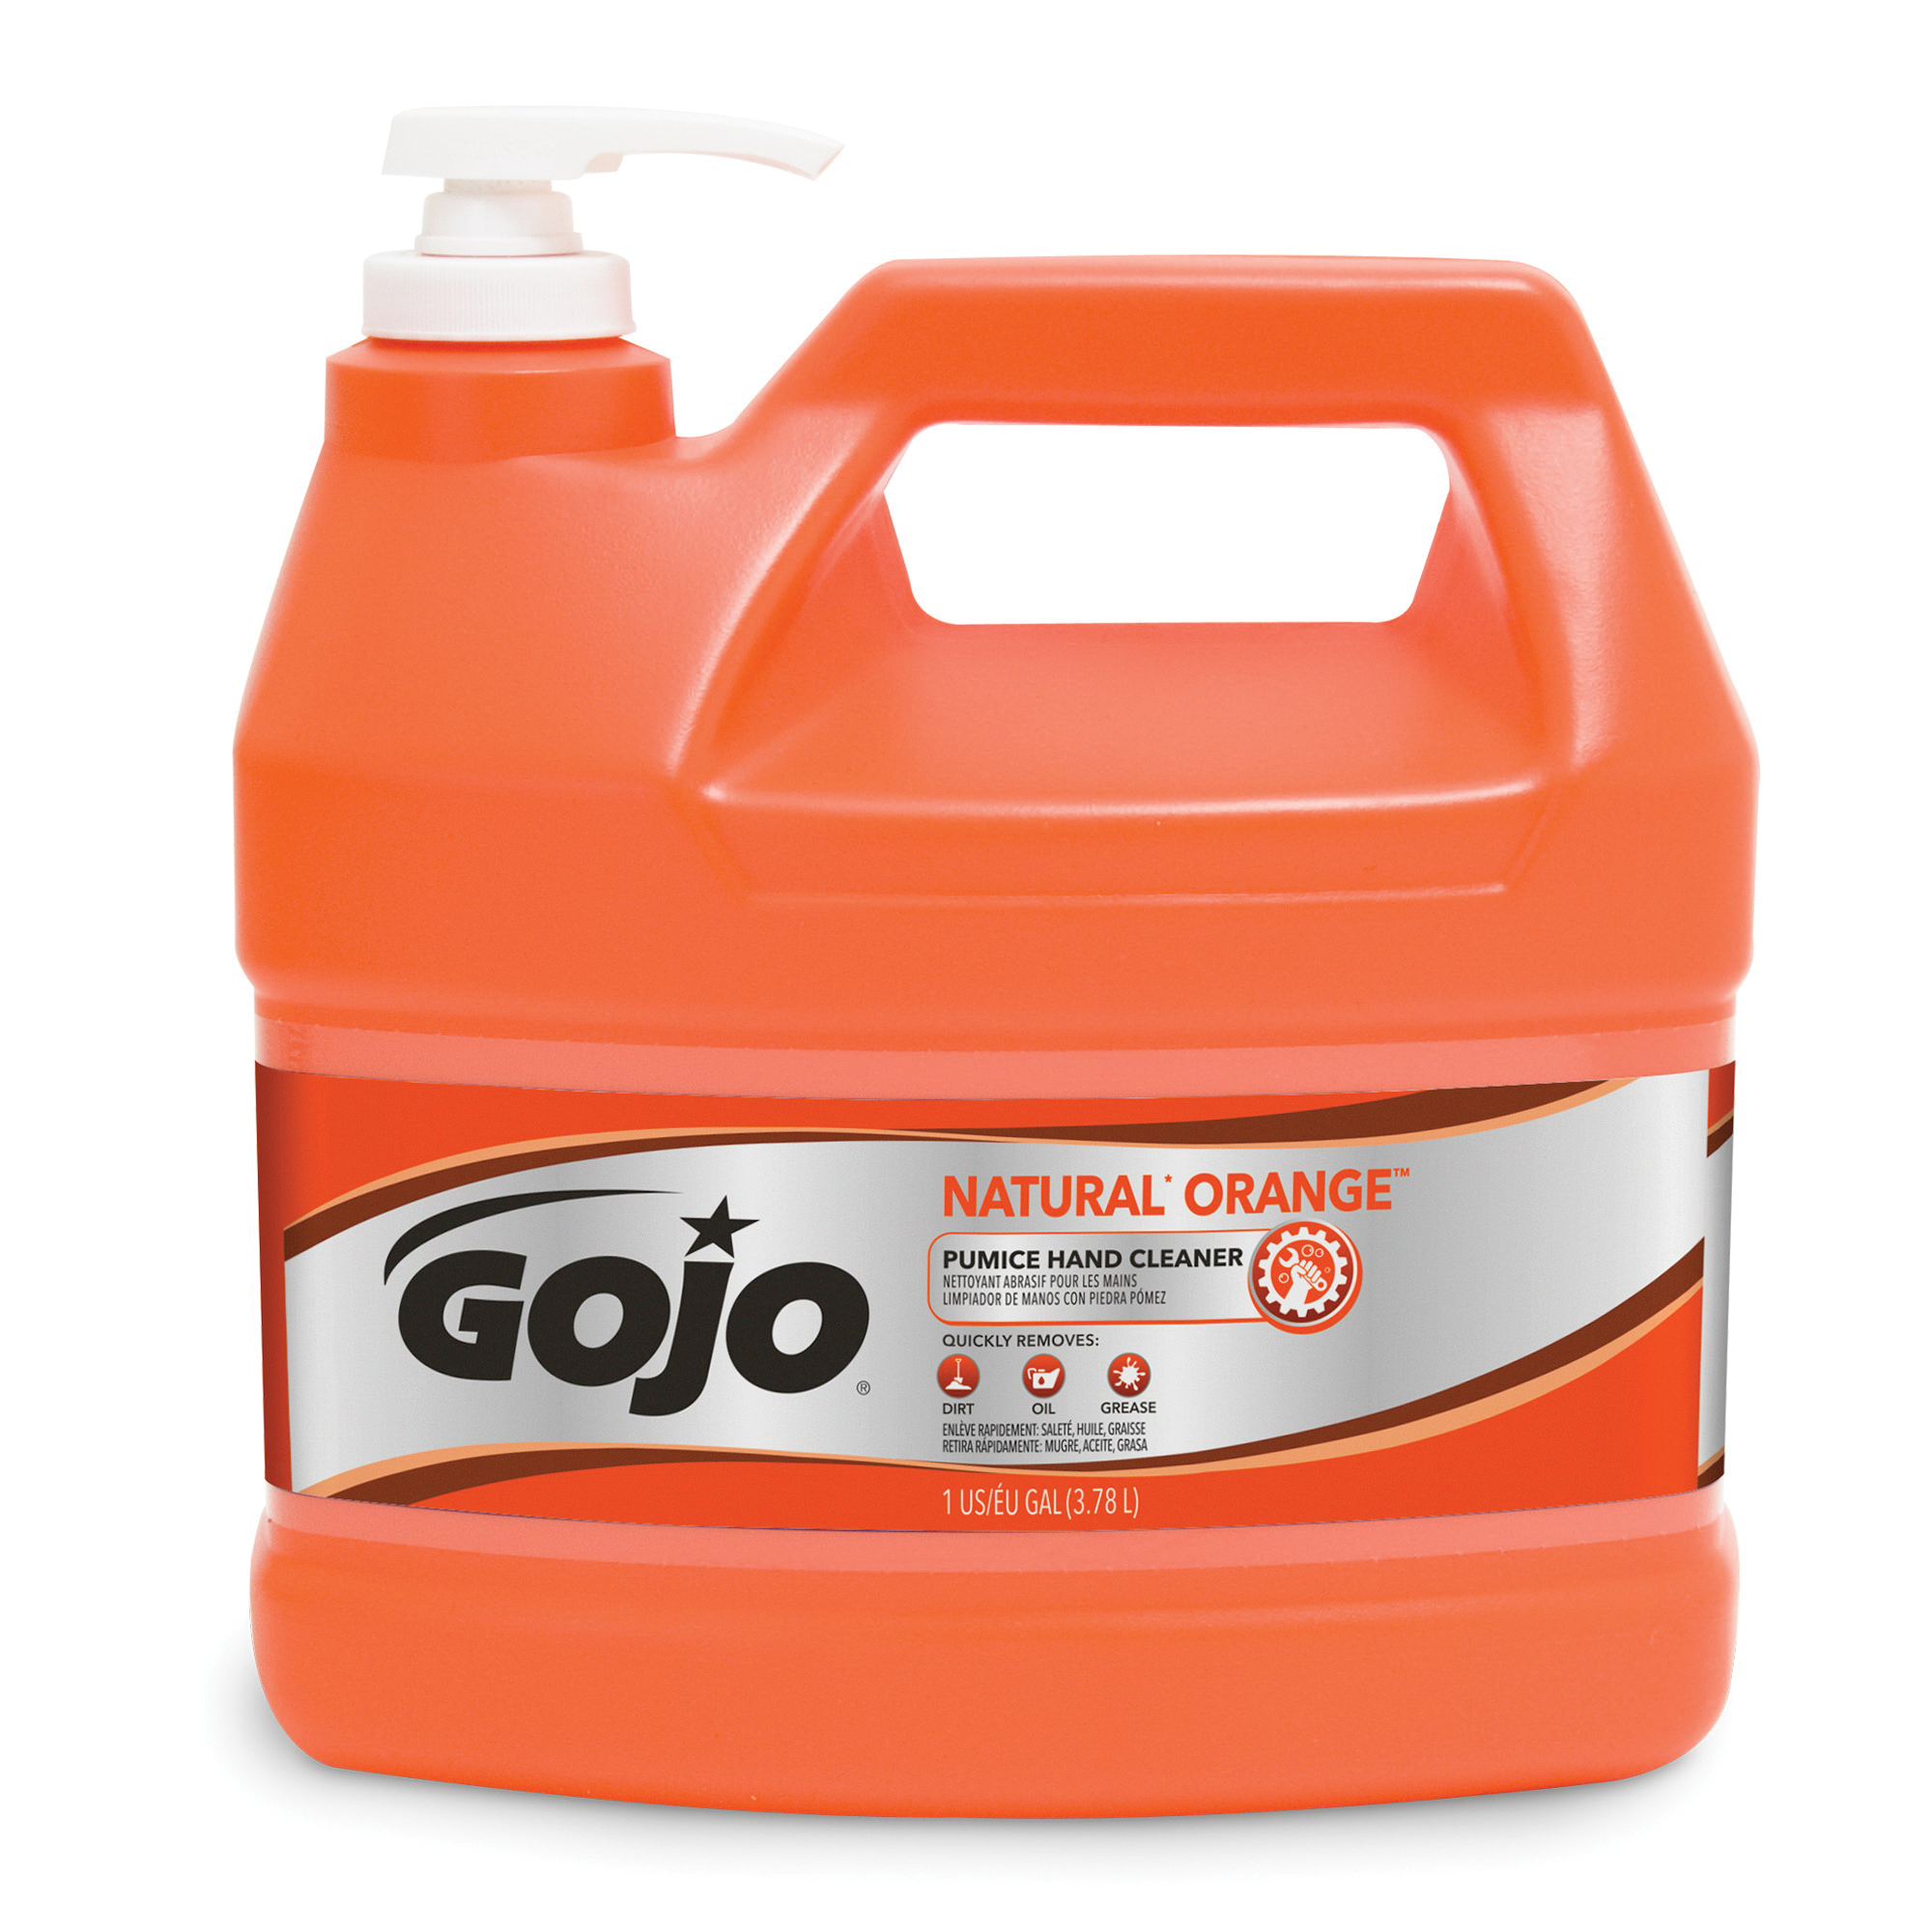 GOJO® 0955-02 NATURAL ORANGE™ Pumice Hand Cleaner, 1 gal Nominal, Pump Bottle Package, Liquid Form, Citrus Odor/Scent, White, Case of 2